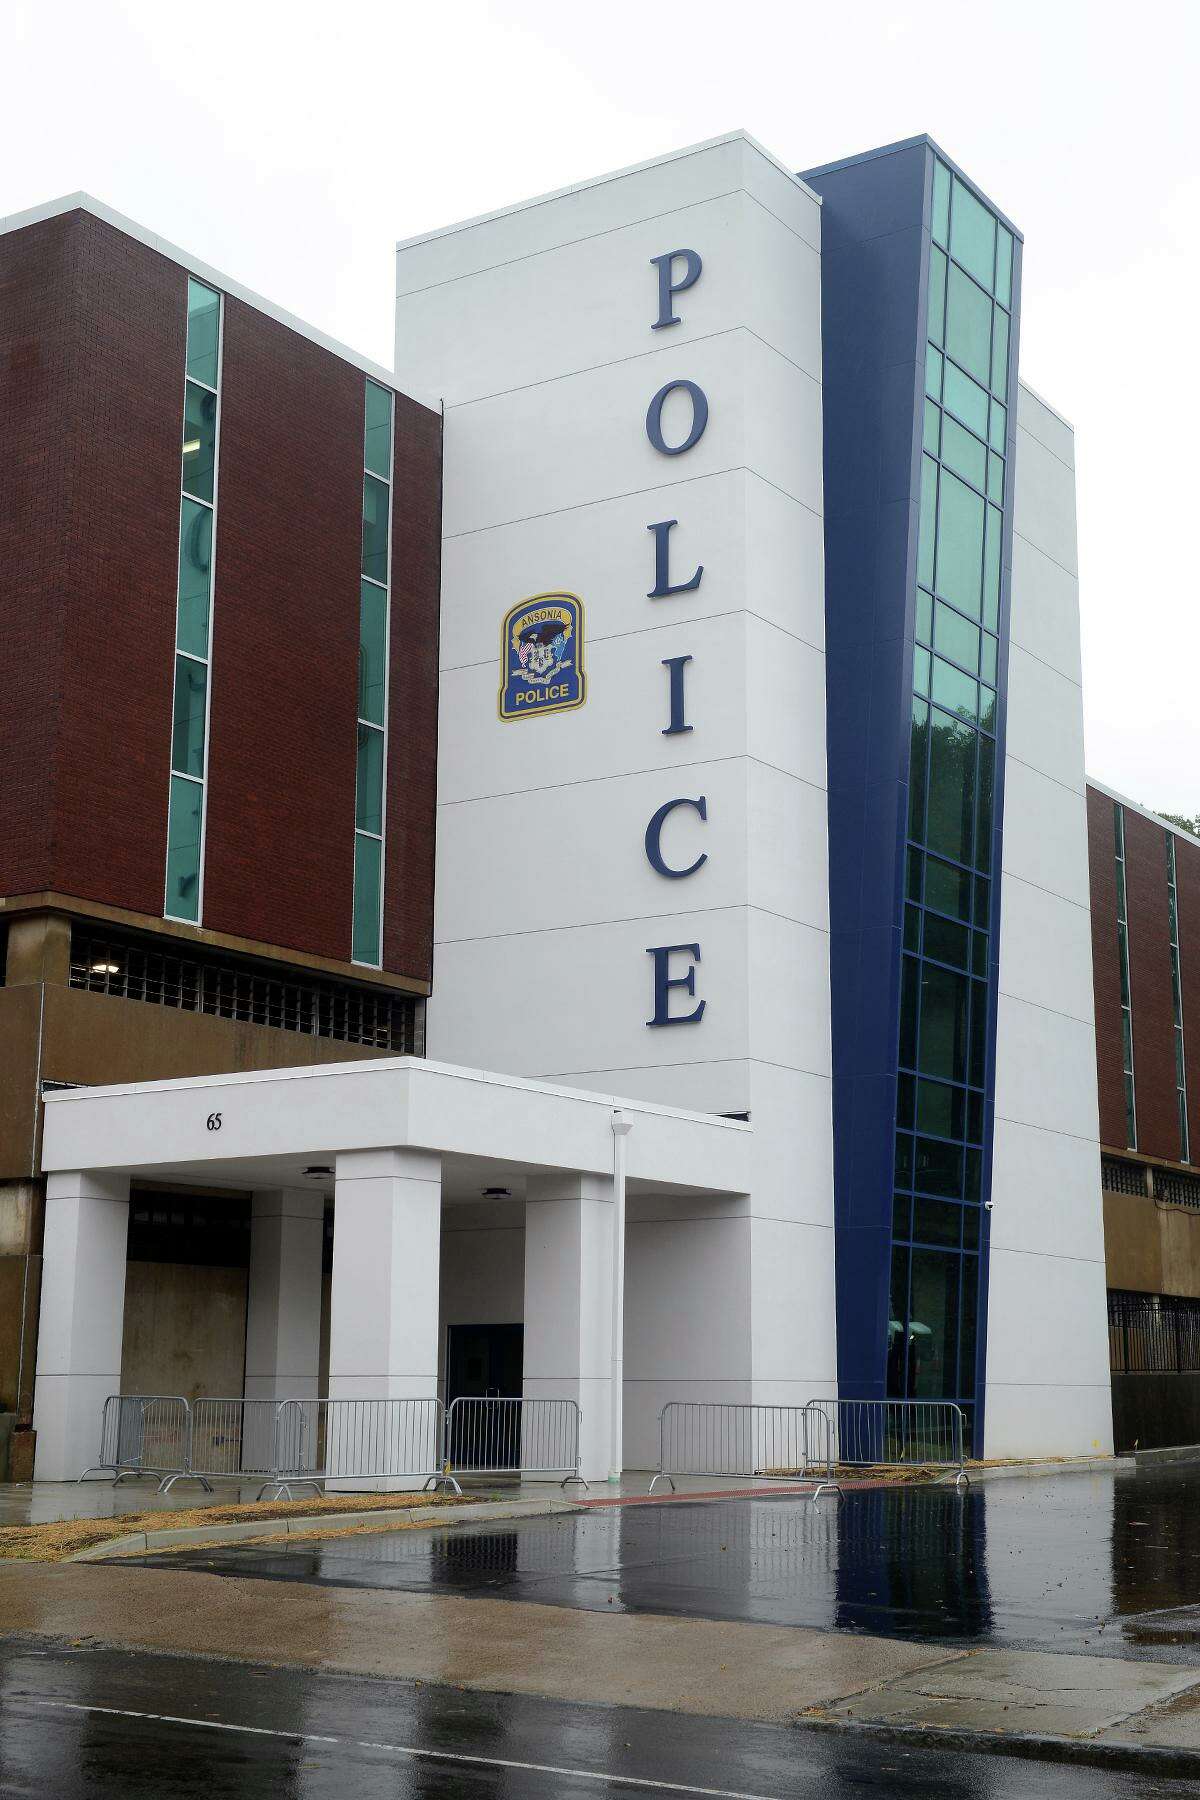 The new Ansonia Police Headquarters, in Ansonia, Conn. Oct. 26, 2021.